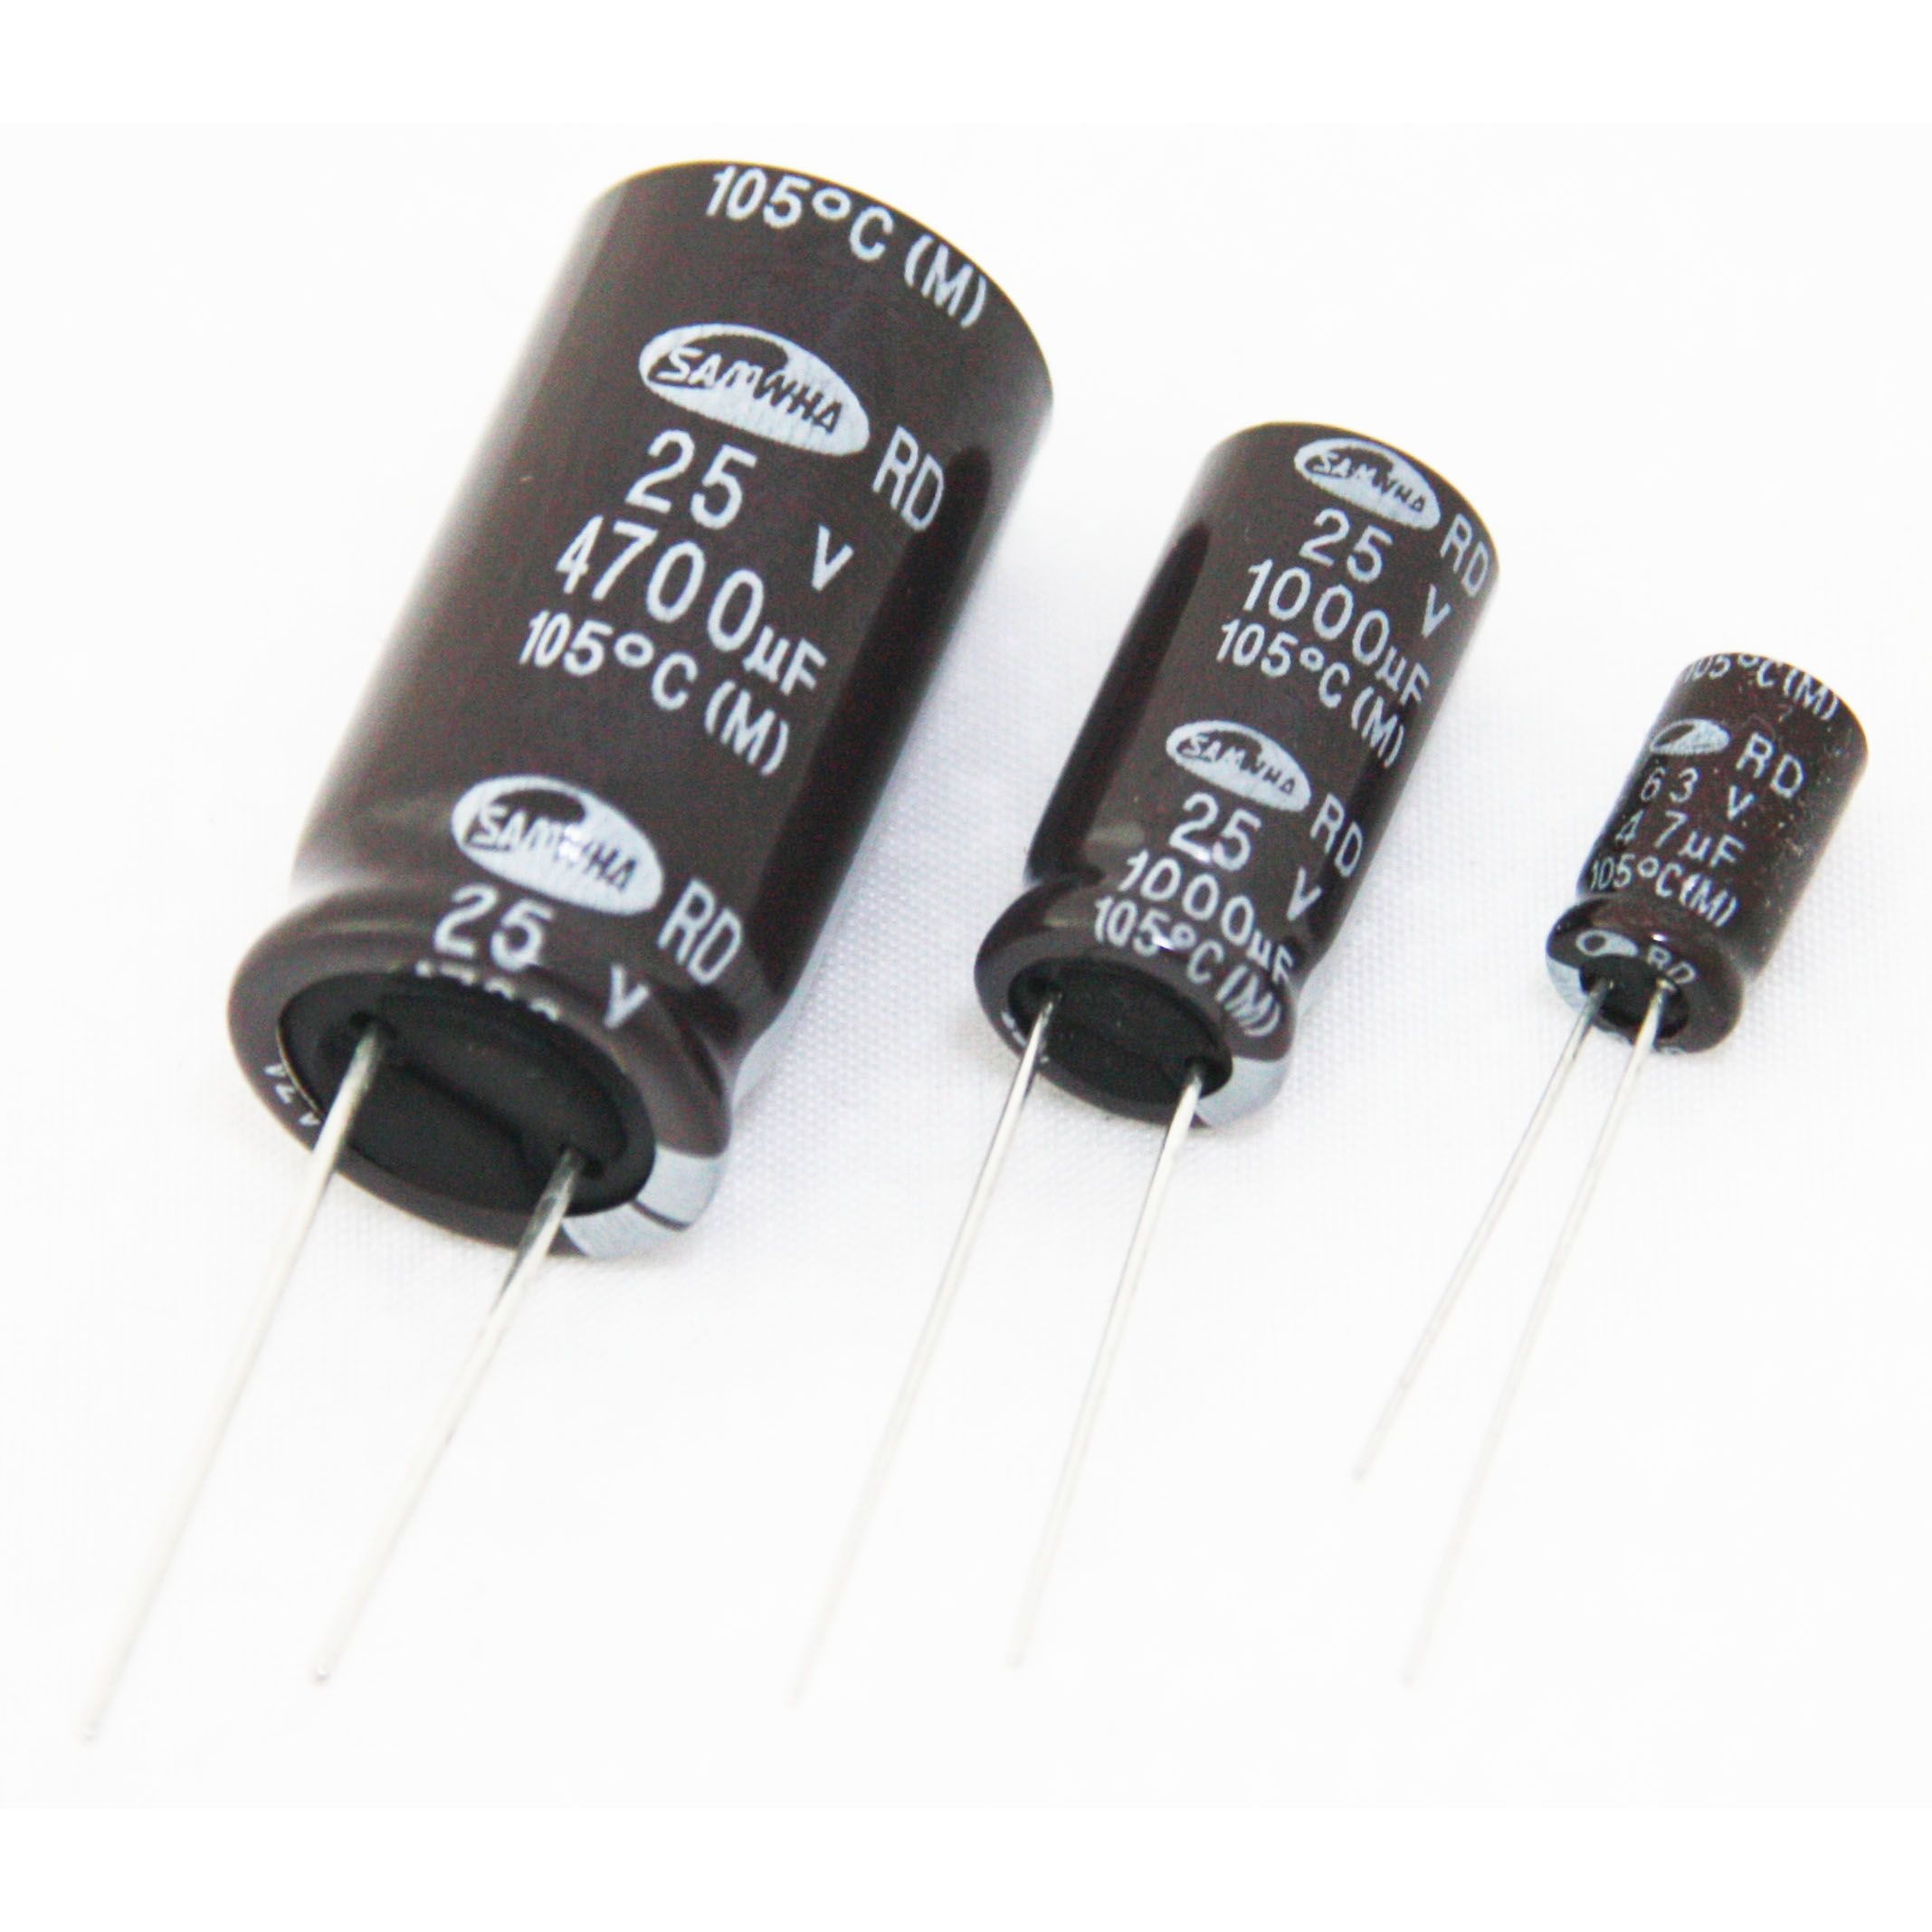 Electrolytic capacitor 105° 2200uF-16V